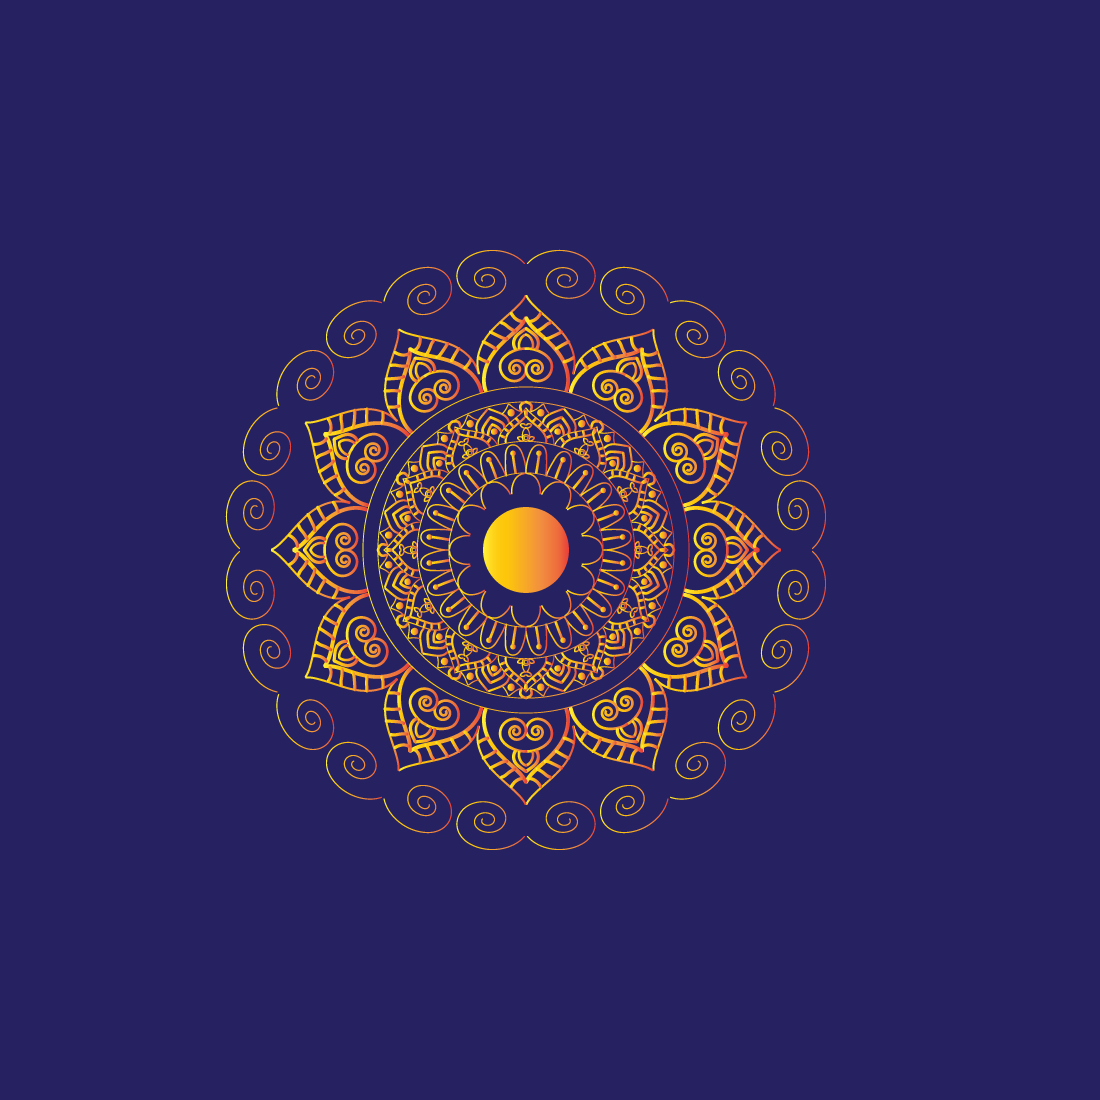 Five Mandala Backgroud Design  cover image.